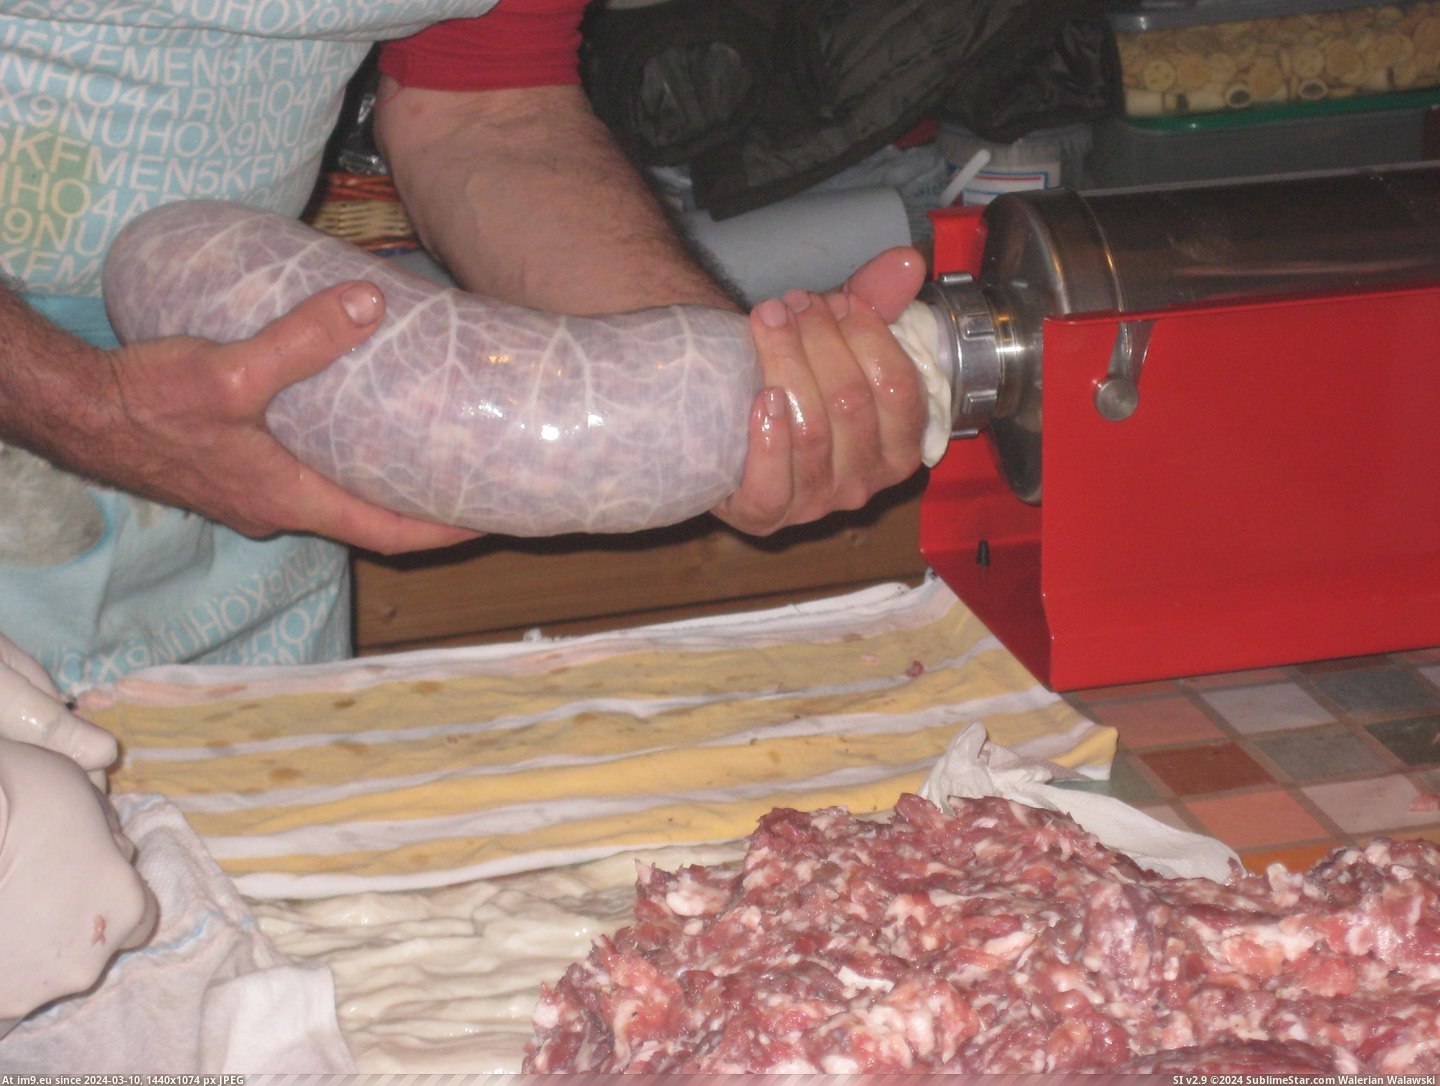 #Making #Homemade #Italy [Pics] Making homemade salami in Italy 2 Pic. (Obraz z album My r/PICS favs))